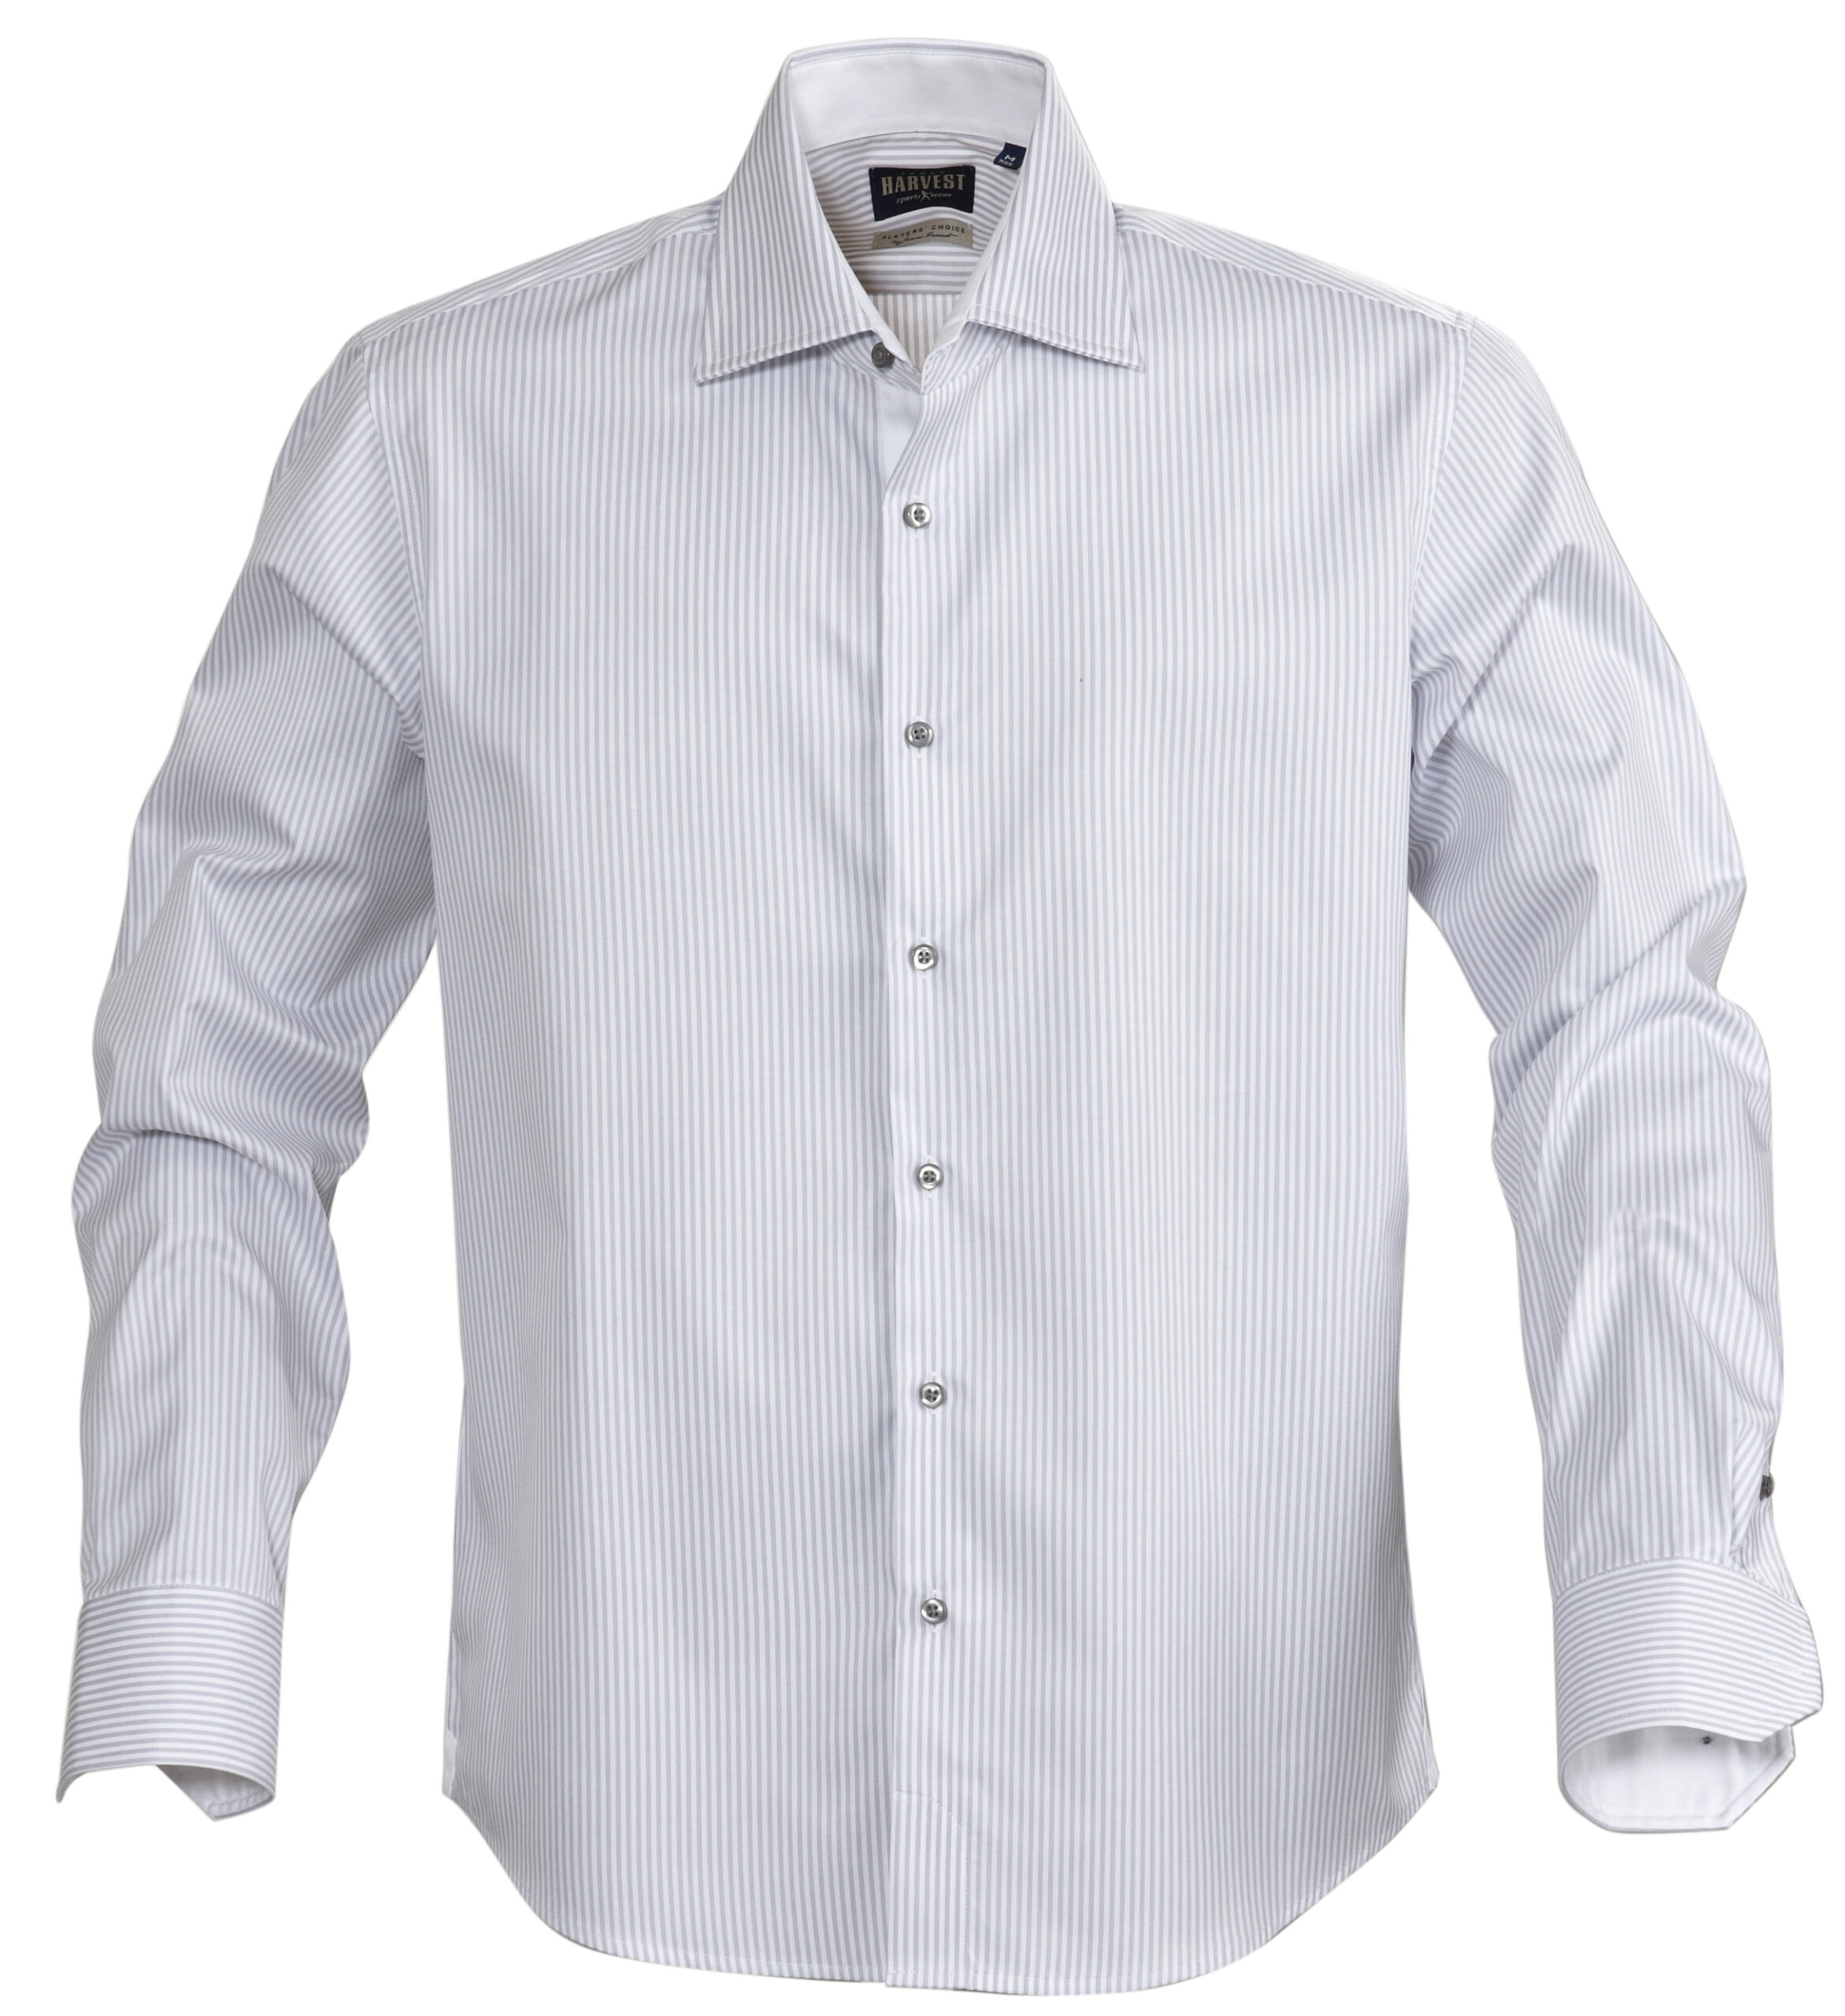 Мужские рубашки каталог. James Harvest рубашка. Рубашка мужская el-Risto. Мужская белая рубашка. Мужчина в рубашке.